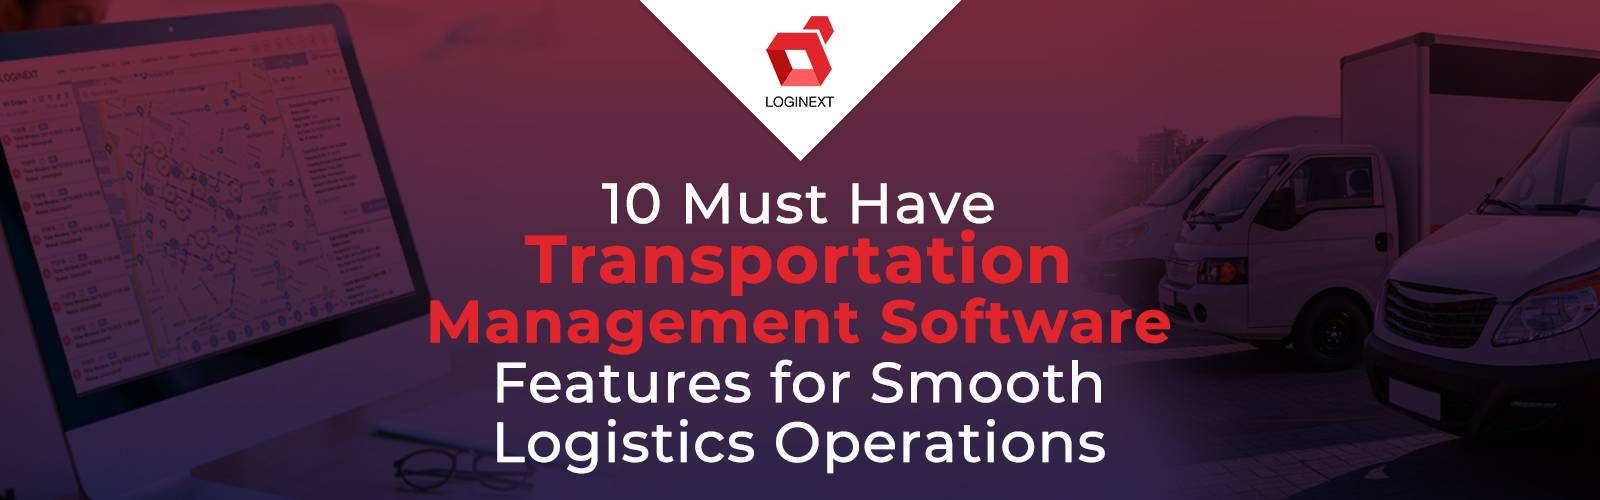 Transportation Management Software Key Features Trending